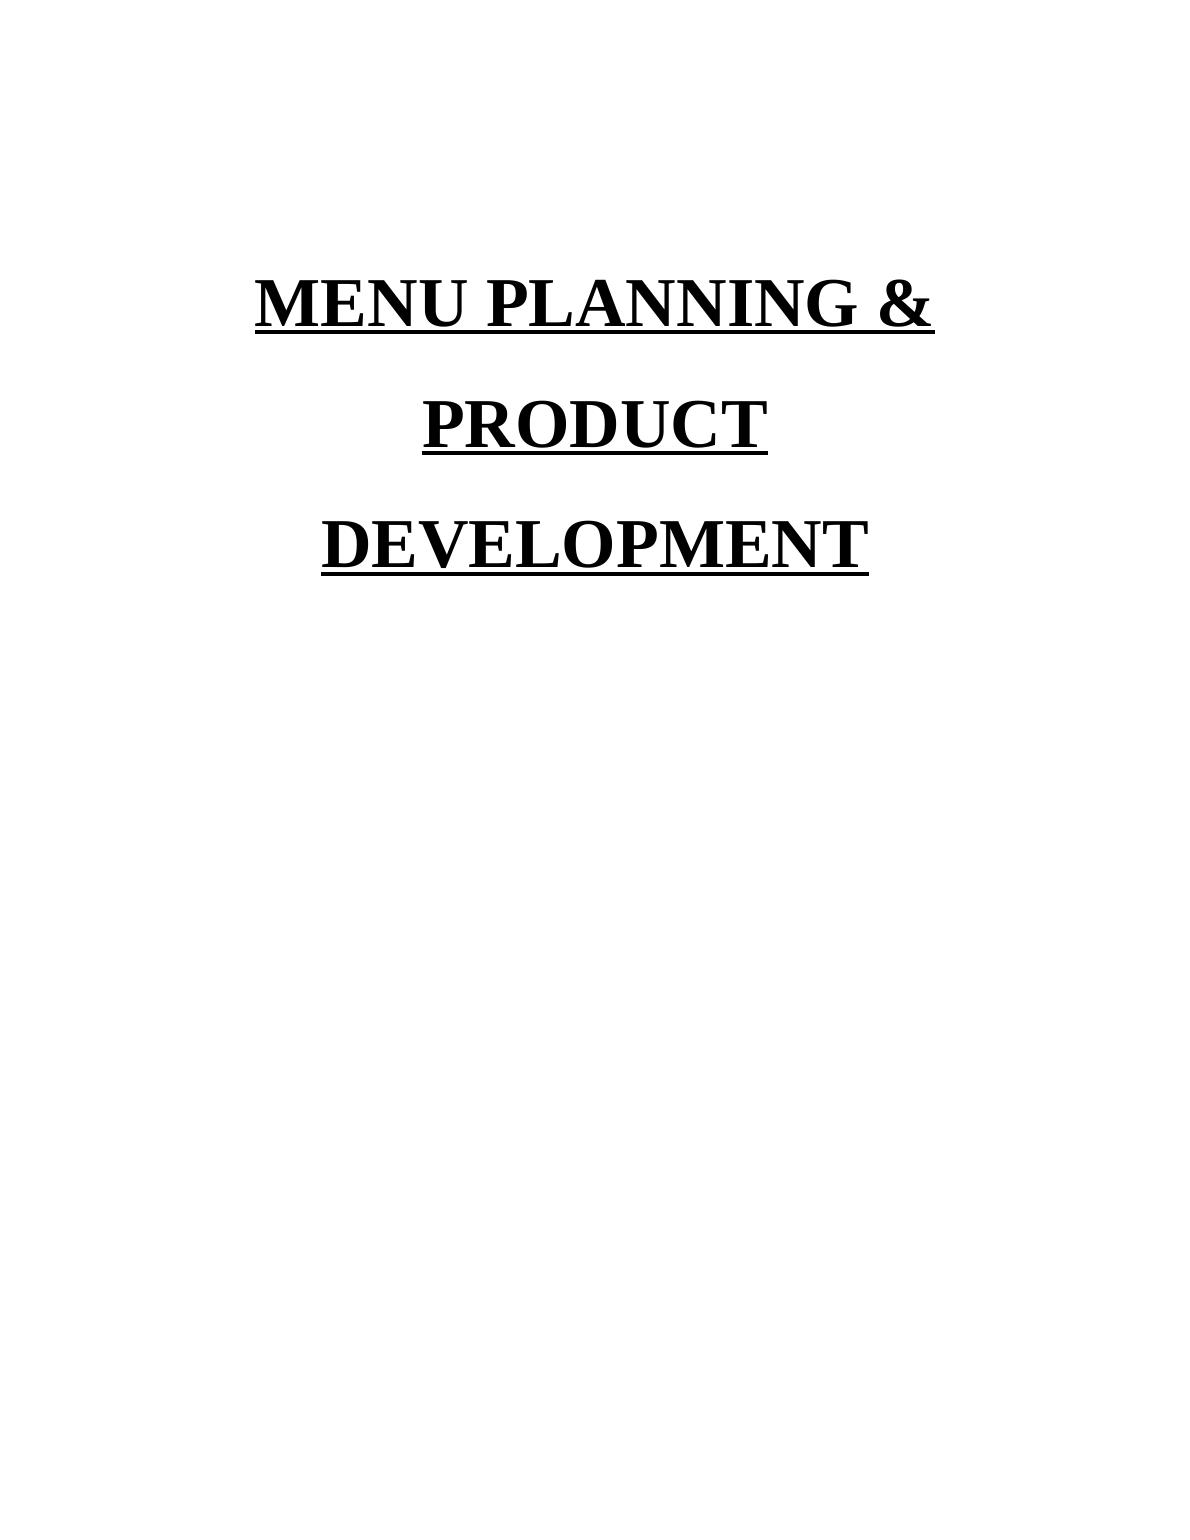 Menu Planning & Product Development Assignment - Chucs Restaurant & Cafe_1